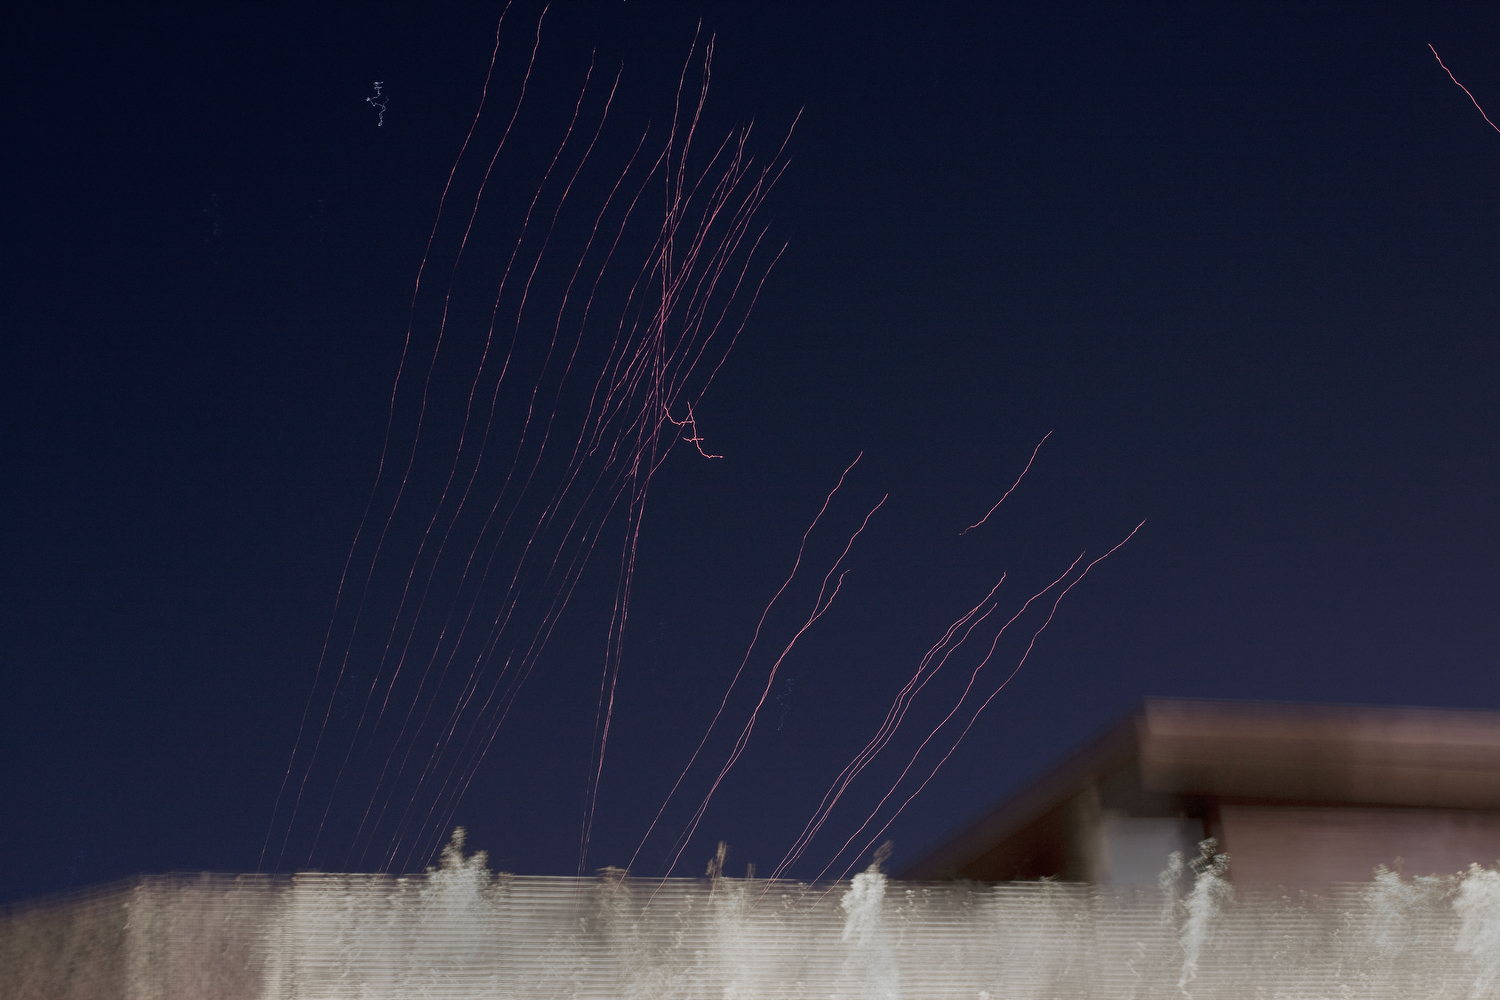 Anti aircraft fire over Tripoli